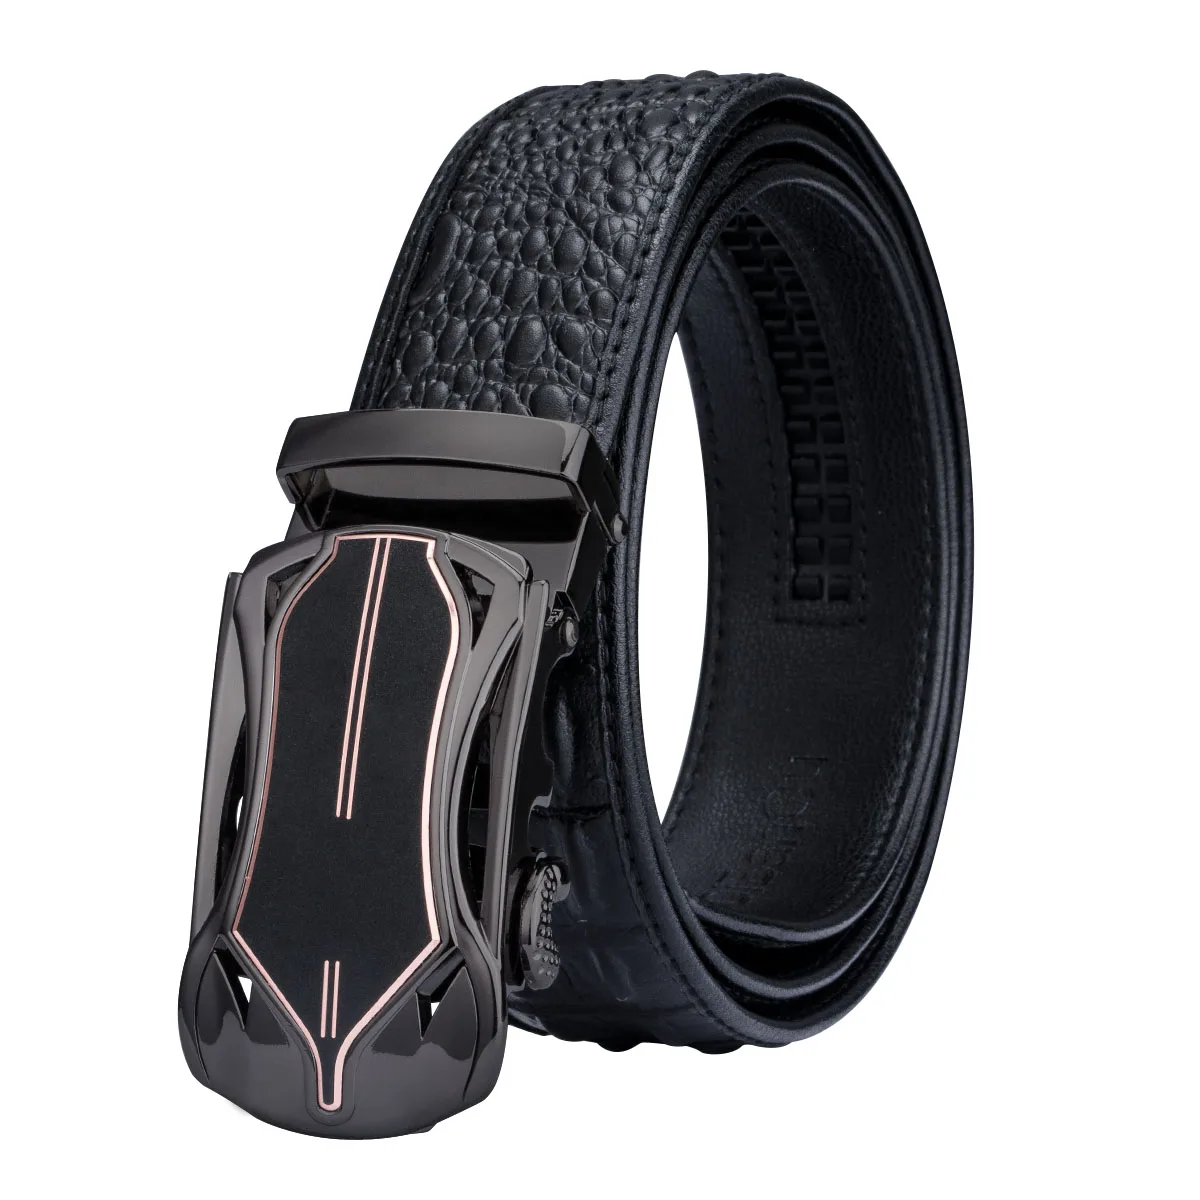 www.speedy25.com : Buy Hi Tie Mens Casual Leather Belts for Jeans Crocodile Pattern Automatic ...